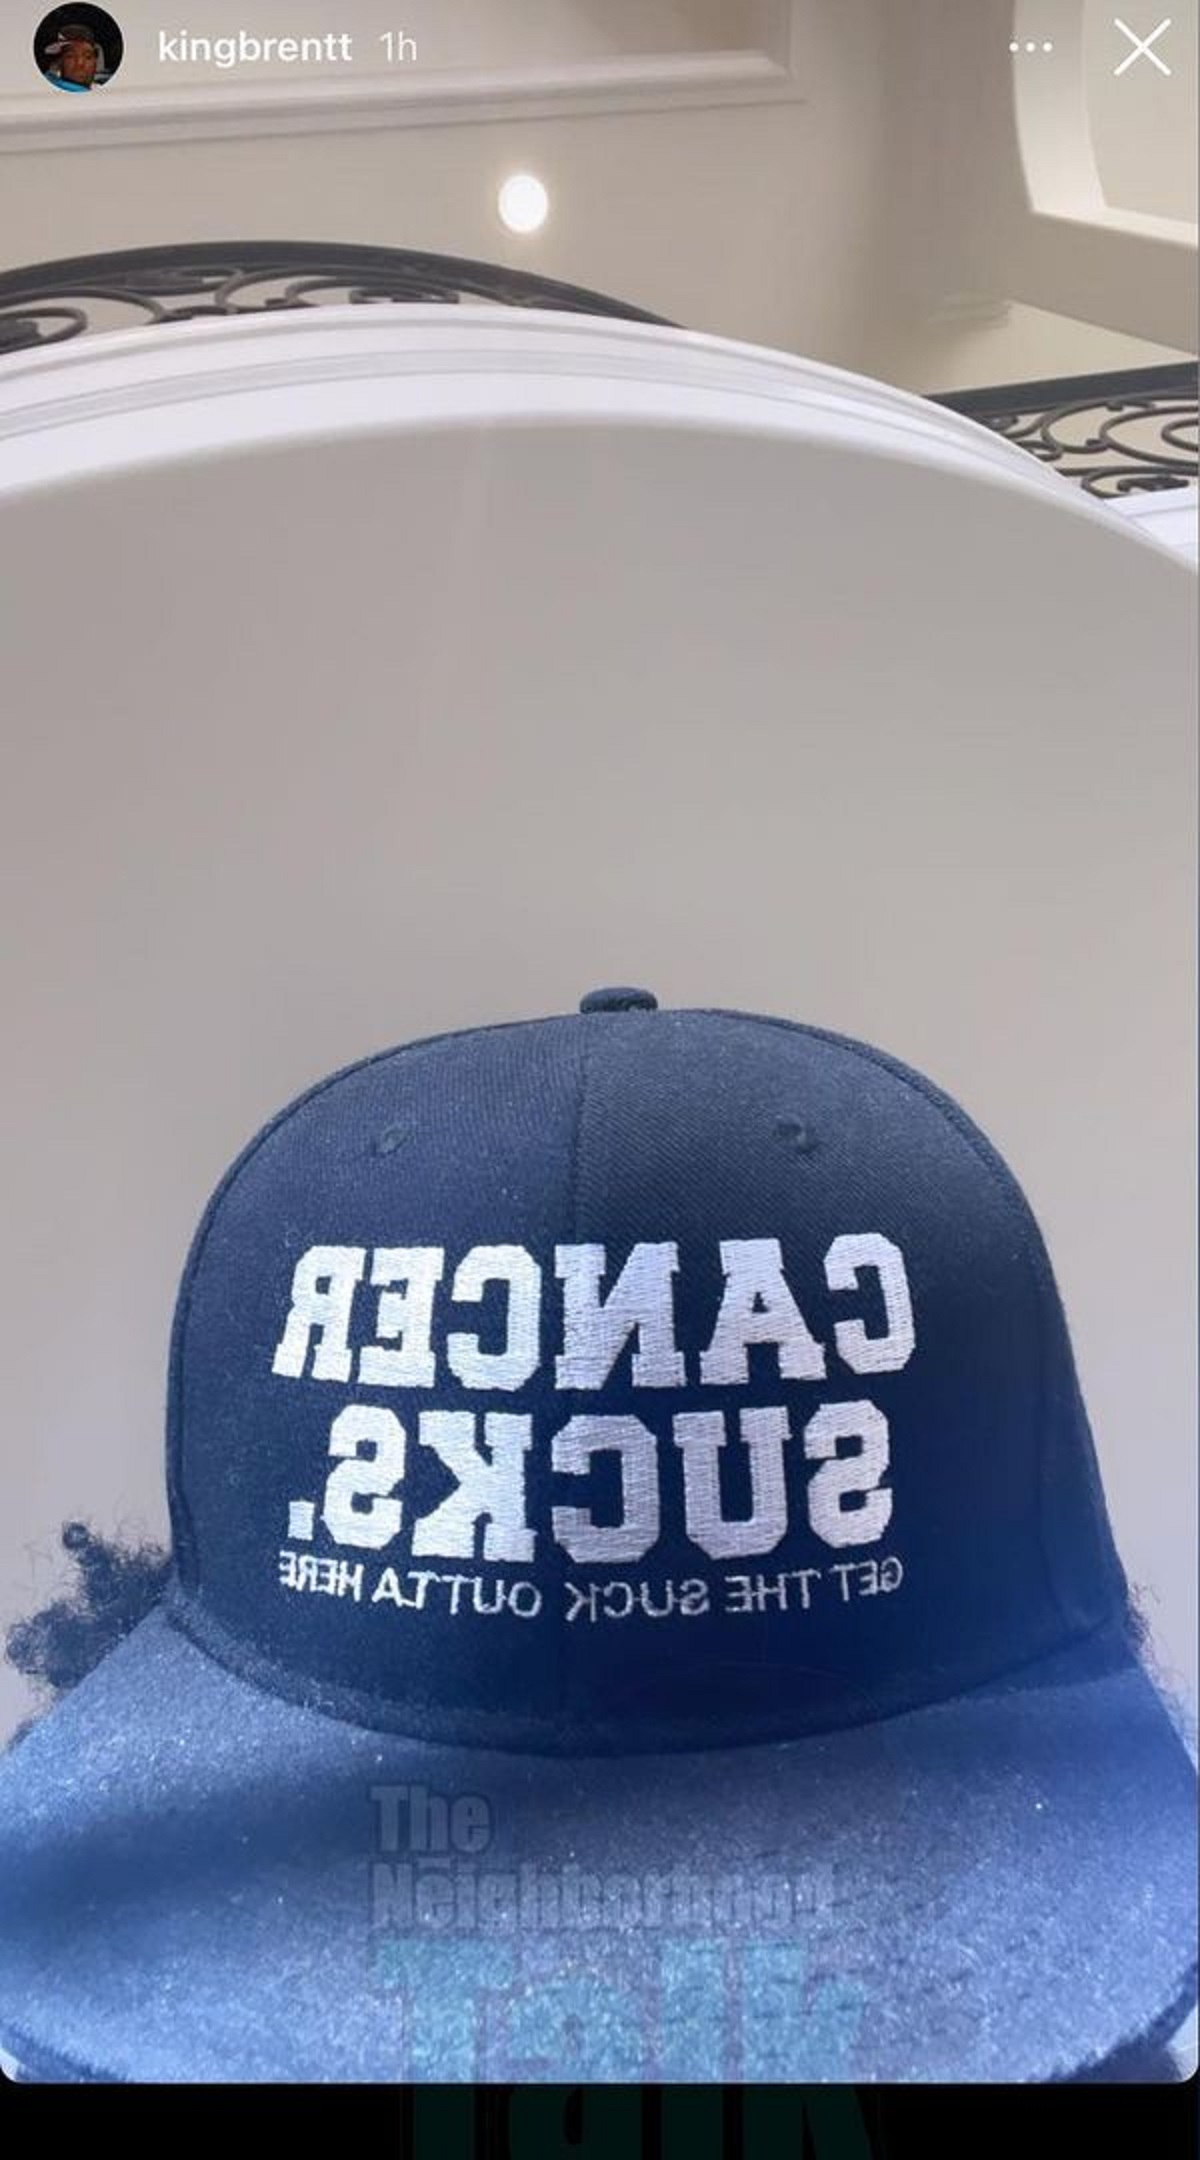 Brentt Leakes posts Gregg's hat on his IG Story